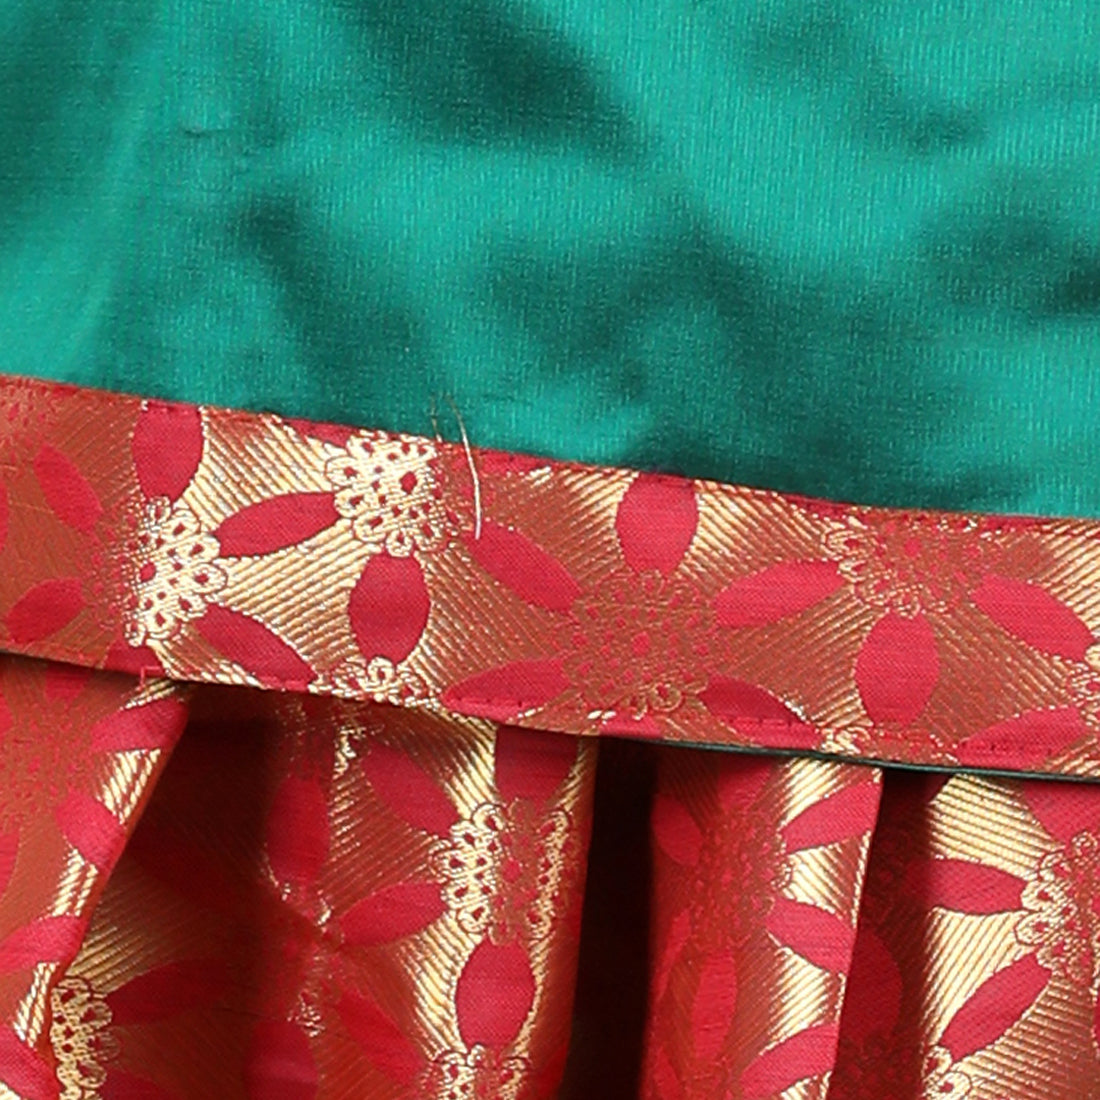 BownBee Silk Half Sleeves Motif Printed South Indian Pavda Pattu Lehenga Choli - Green